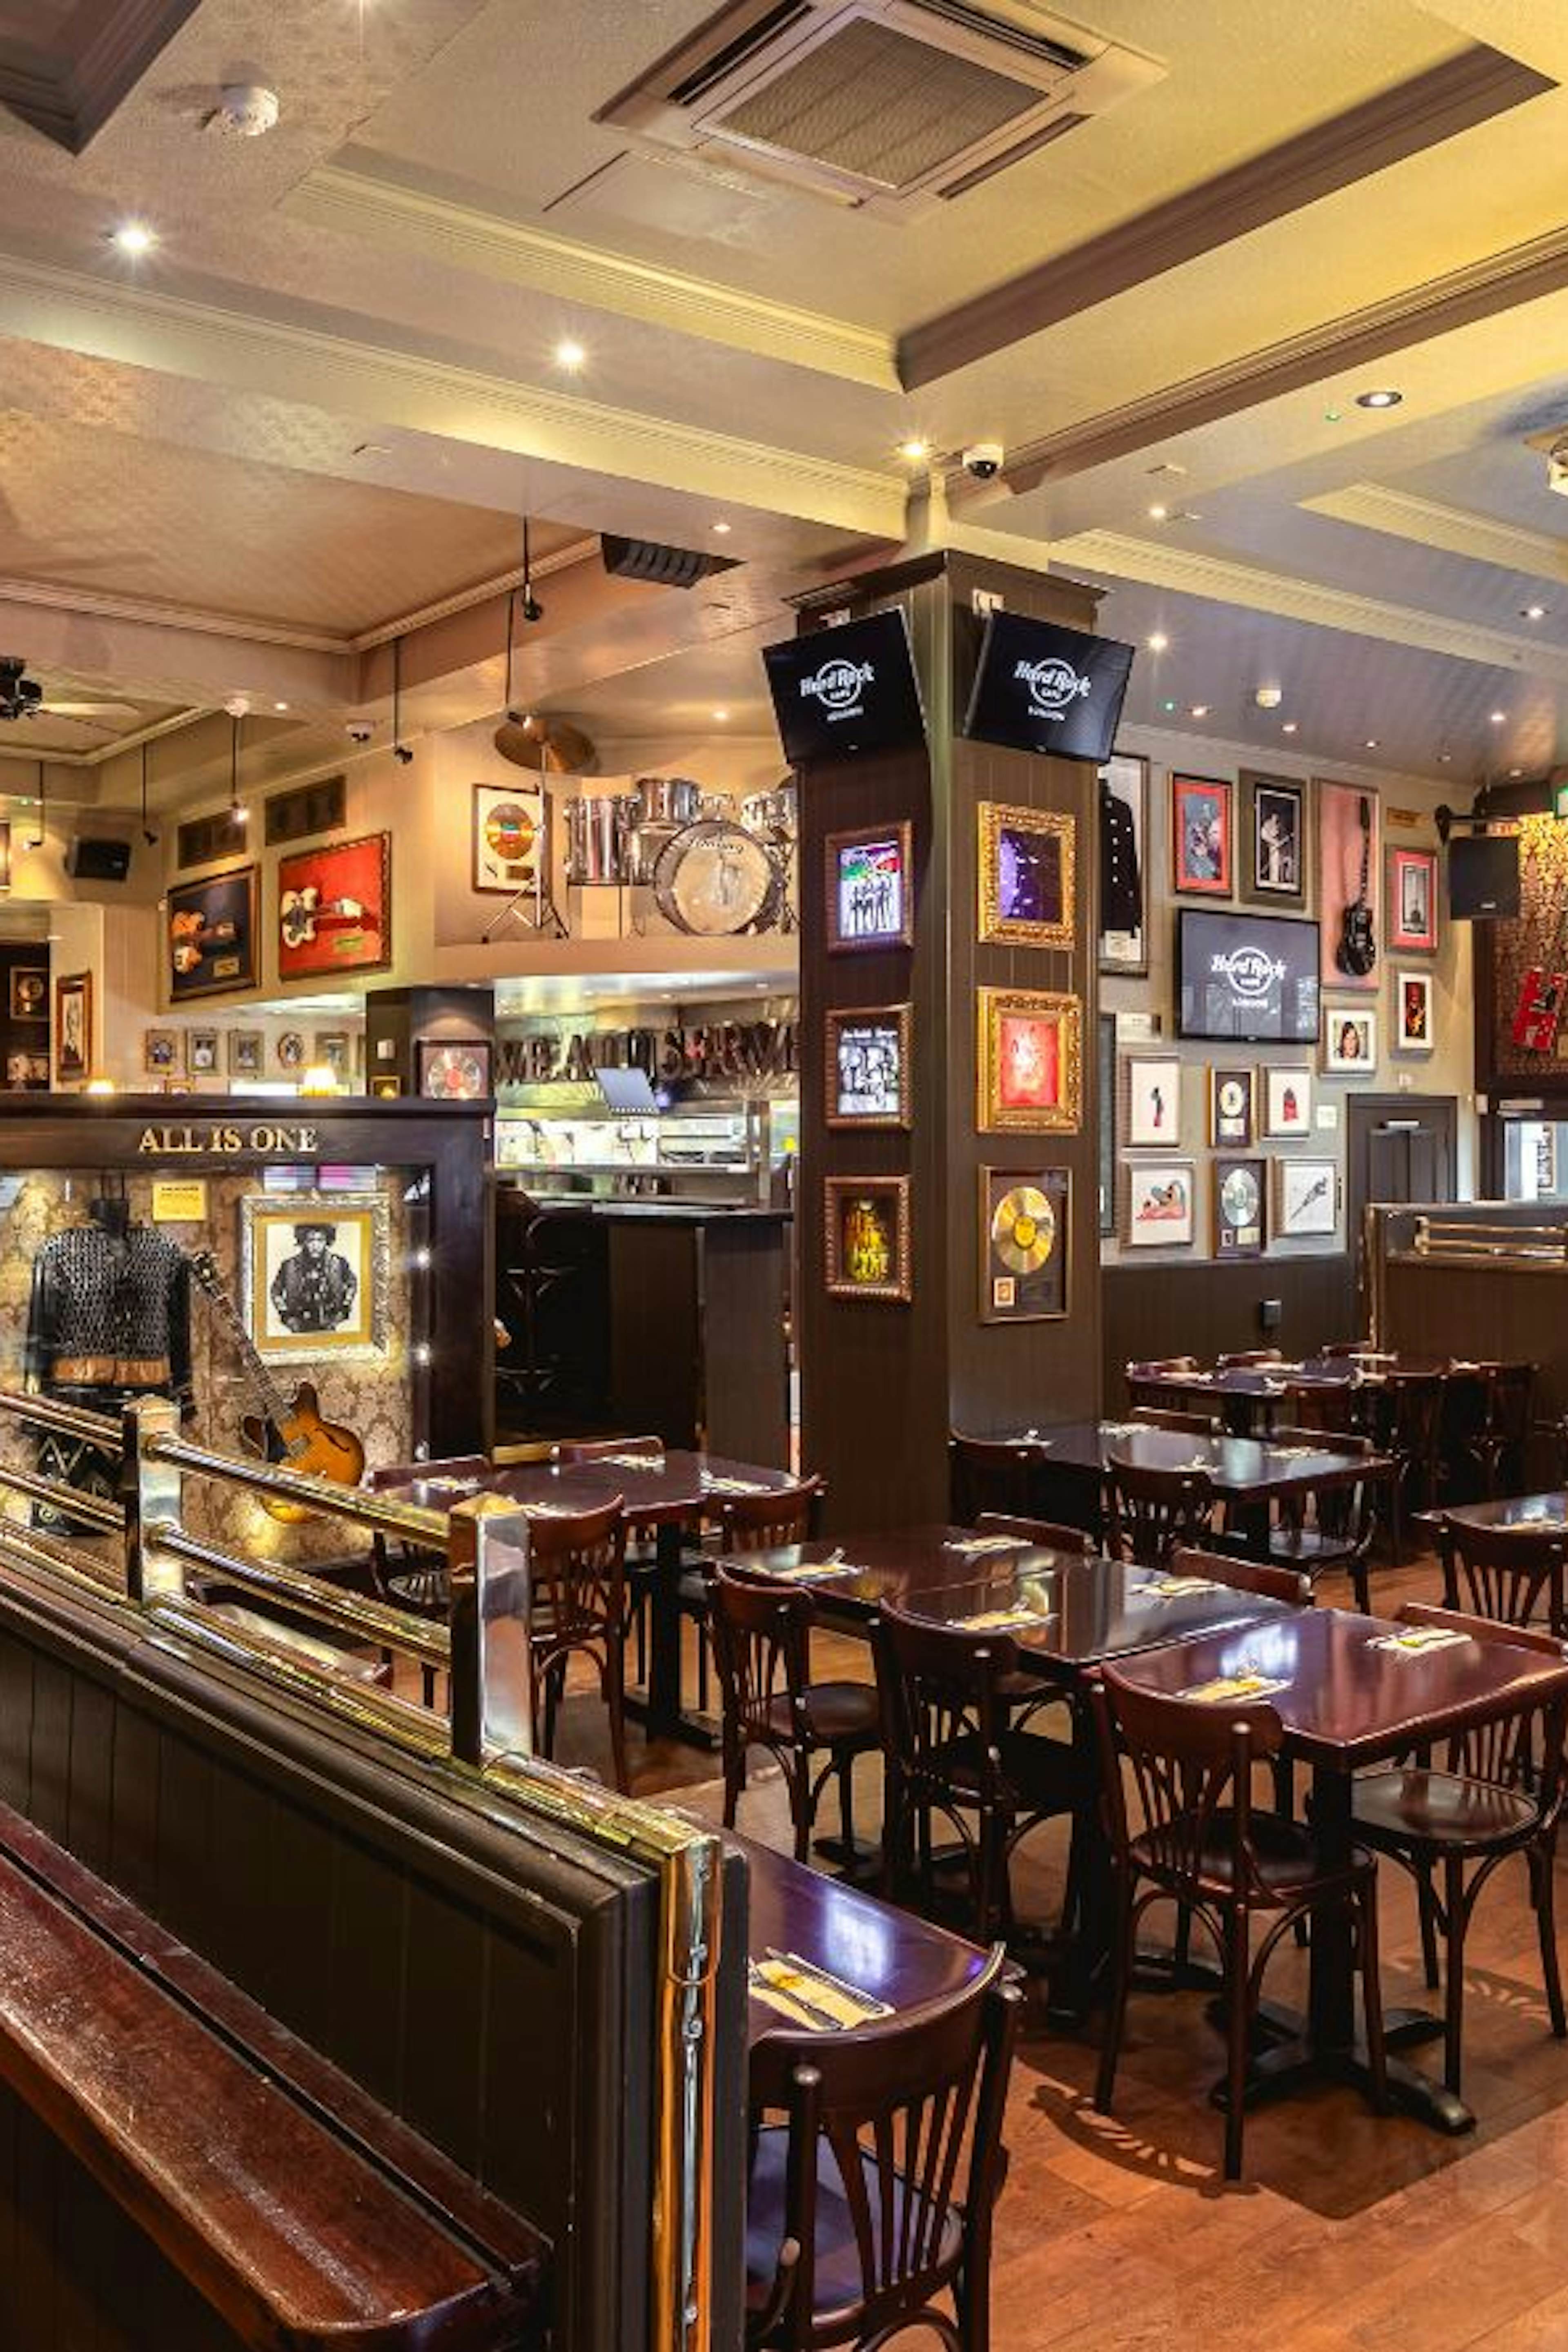 Hard Rock Cafe London